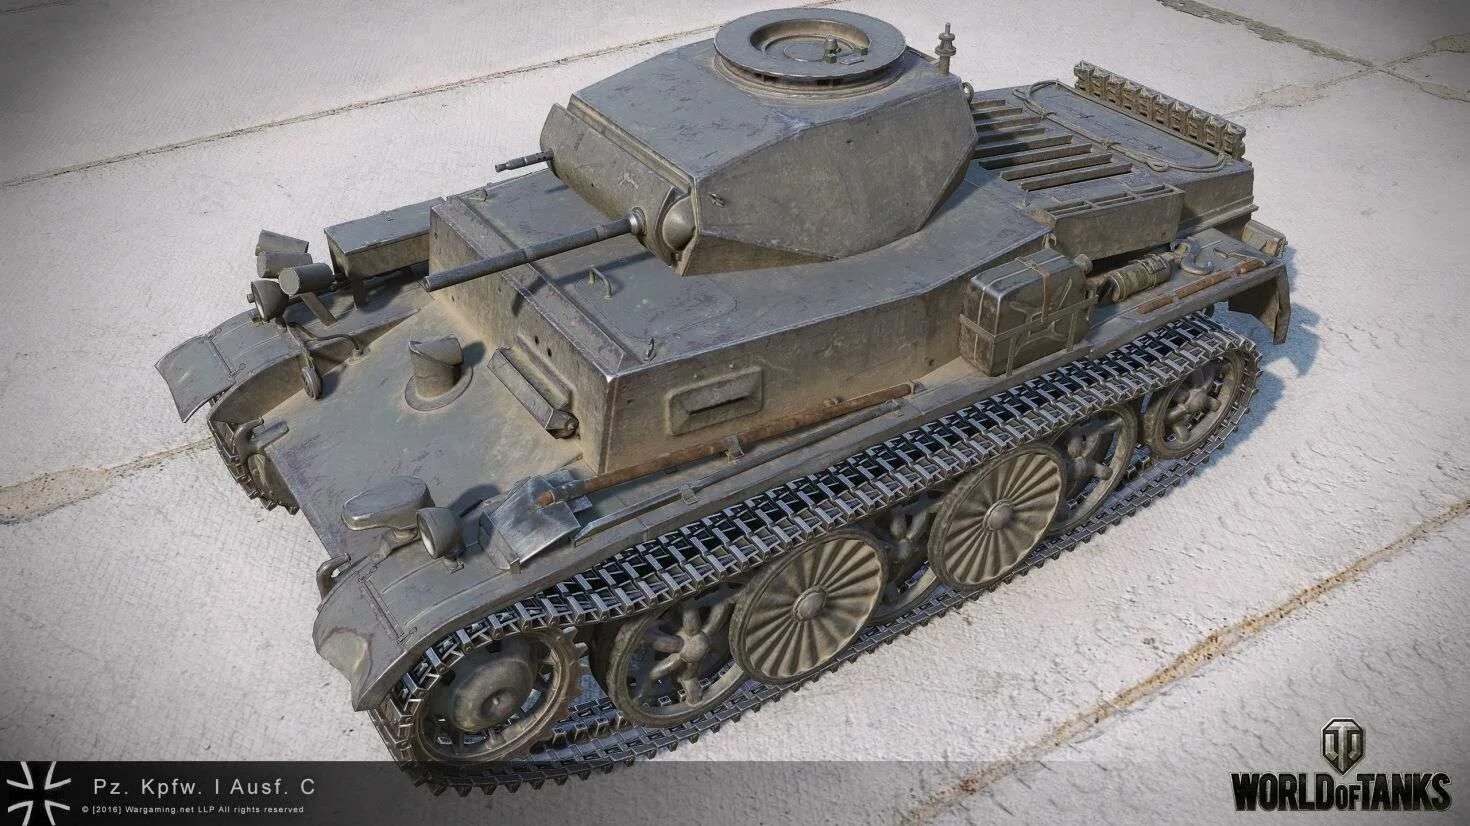 Pz kpfw 1 ausf. Танк PZ 1. Танк PZ Kpfw 1. Танк PZ 1 C В World of Tanks. PZ 4 Ausf c.